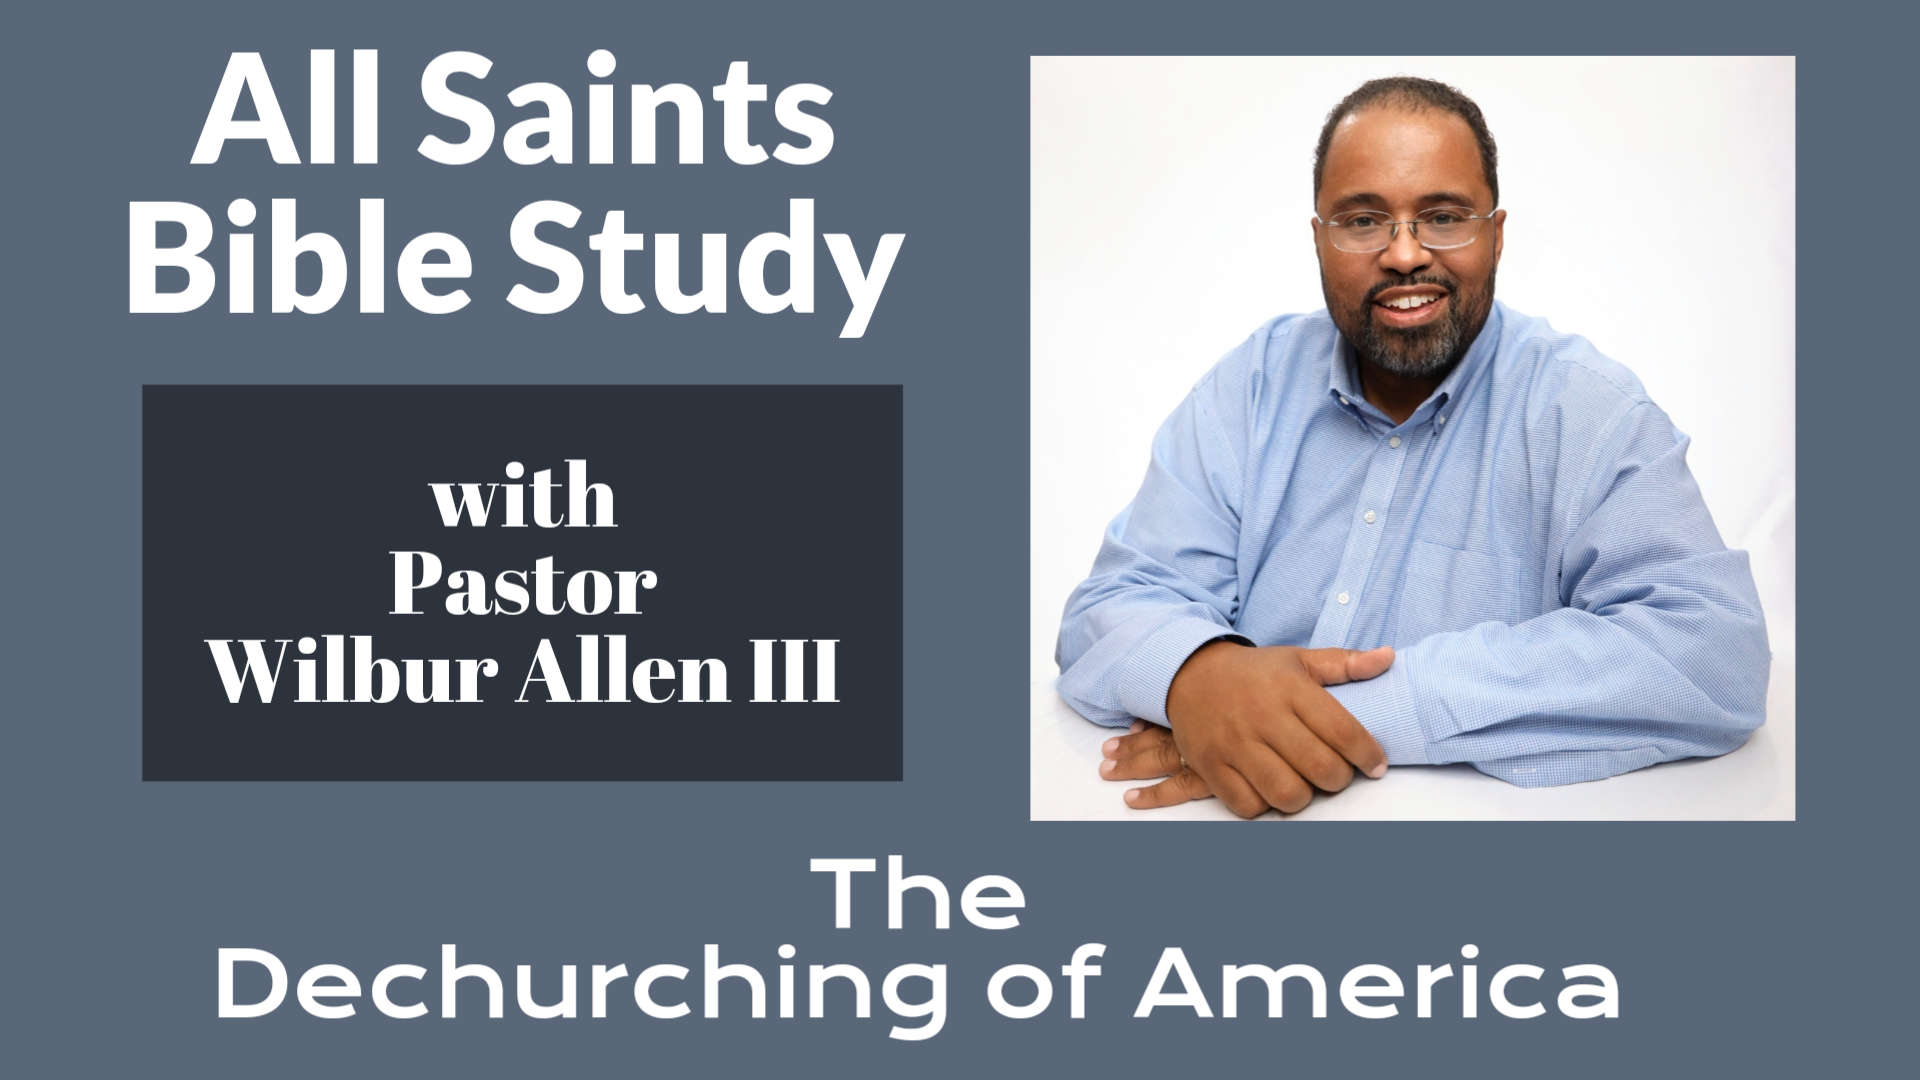 All Saints Virtual Bible Study - The Dechurching of America